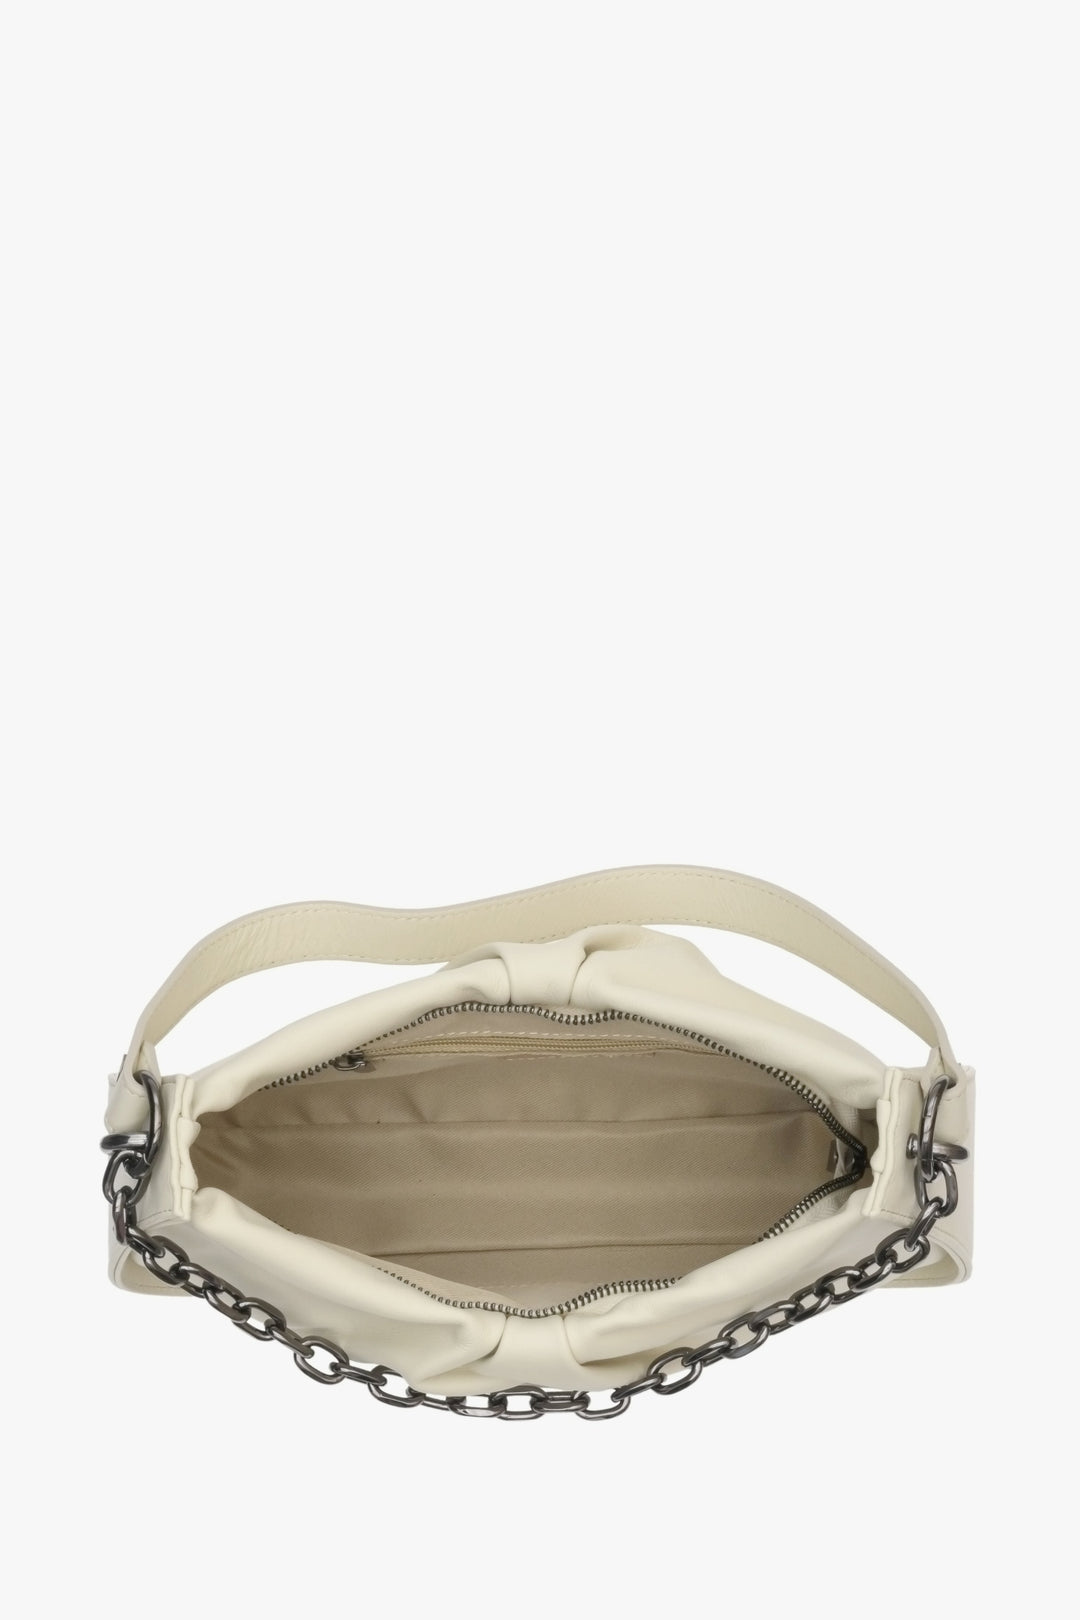 Estro women's handbag in white made of genuine leather - interior presentation.